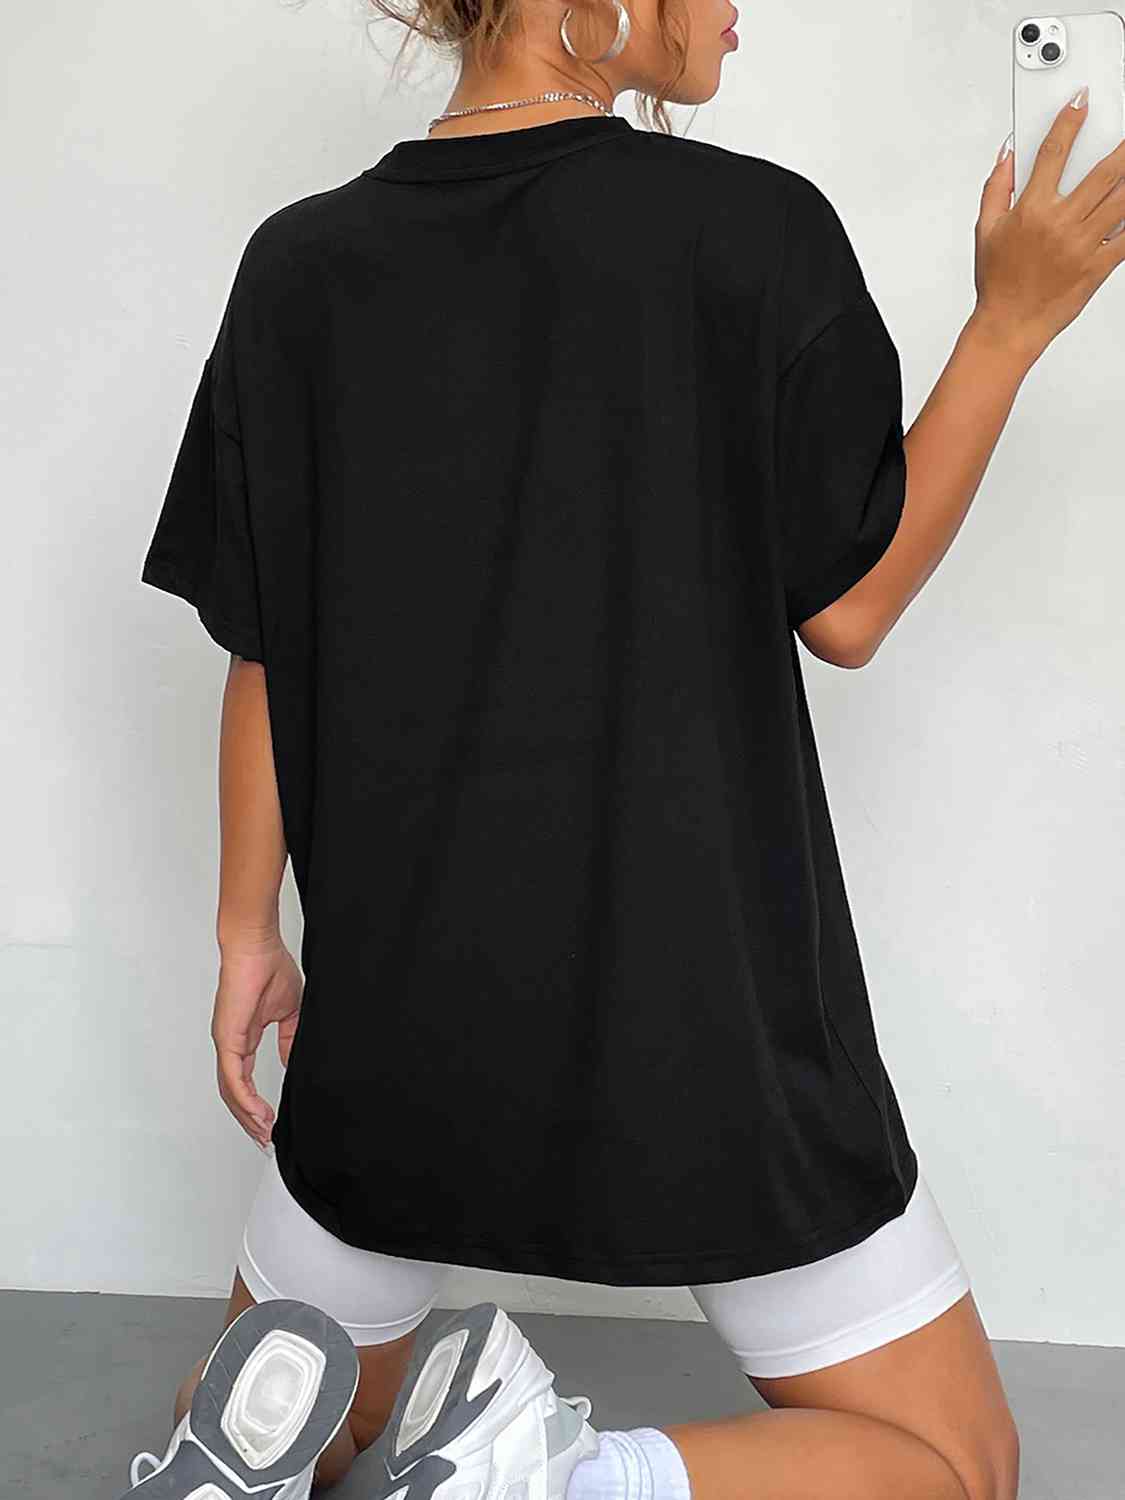 Round Neck Short Sleeve Ghost Graphic T-Shirt